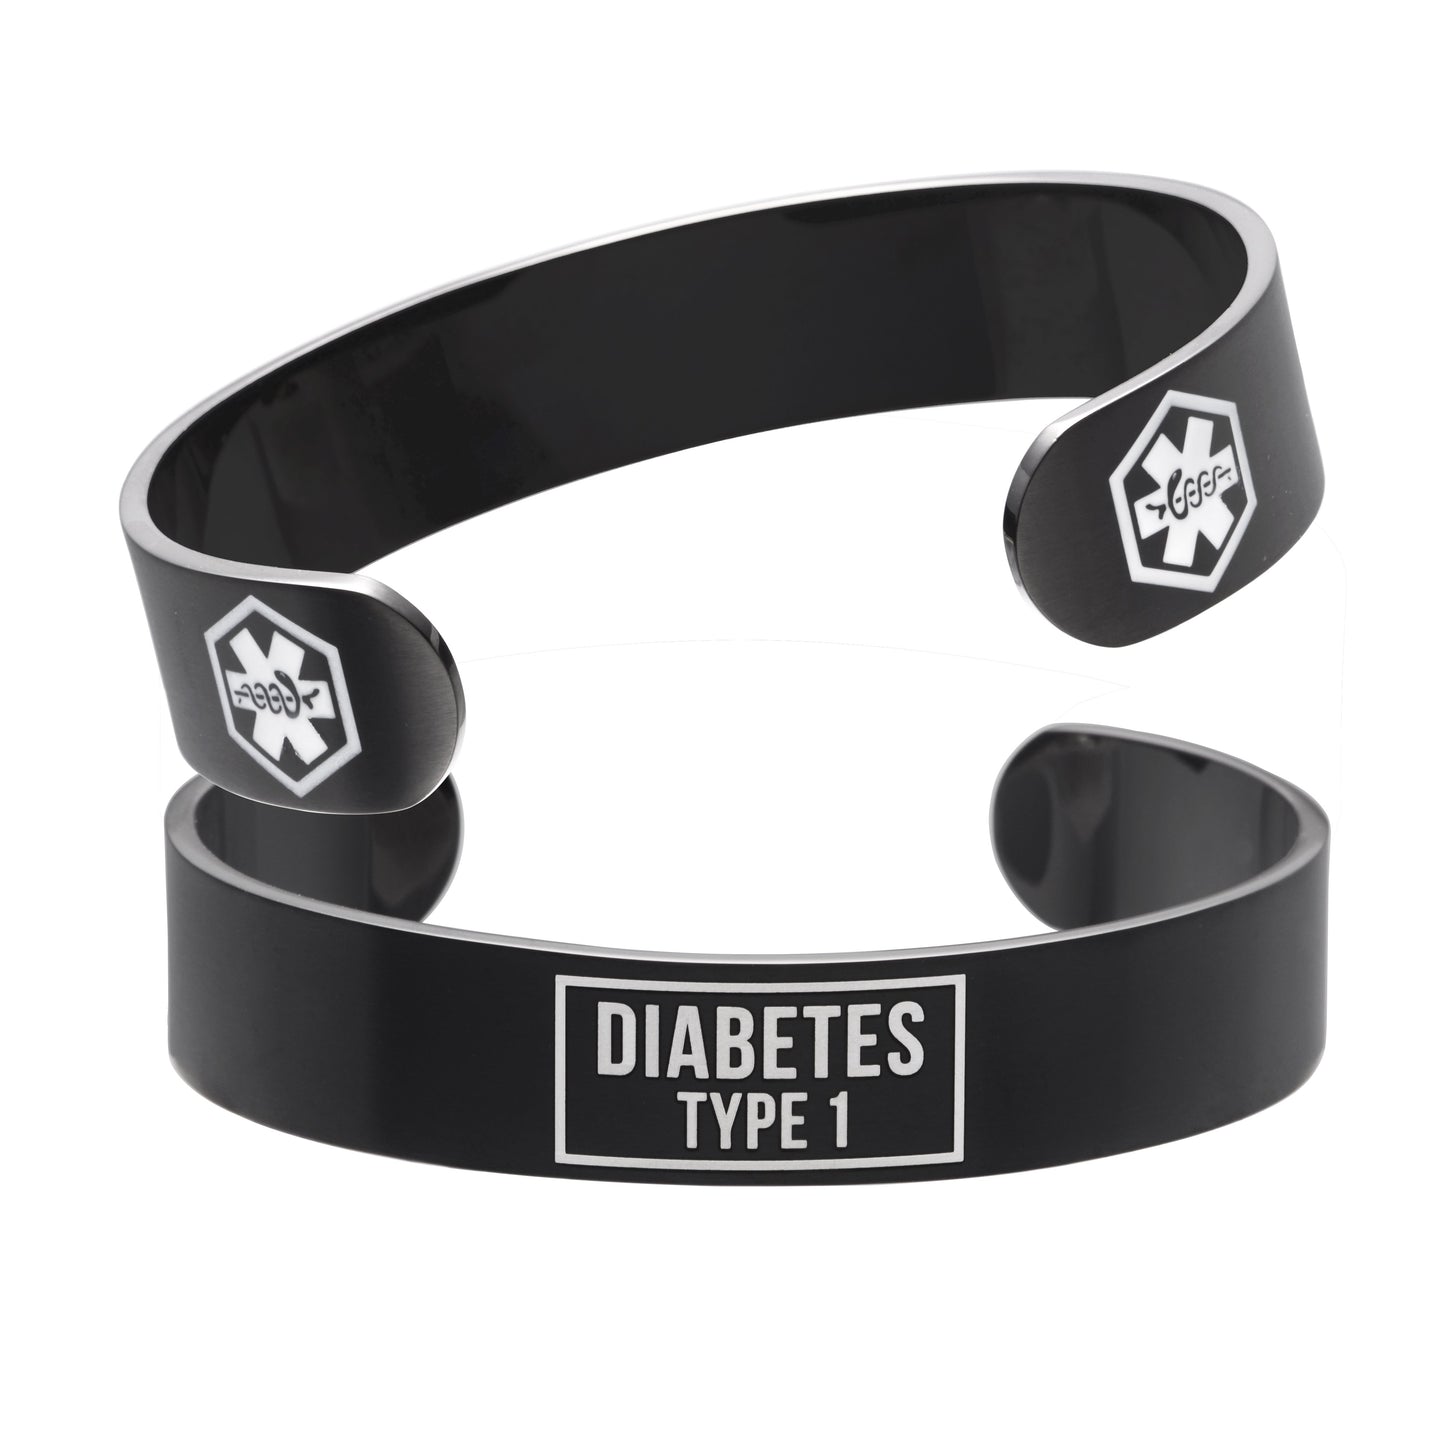 Black Medical Alert Cuff Bracelet-type 1 diabetes